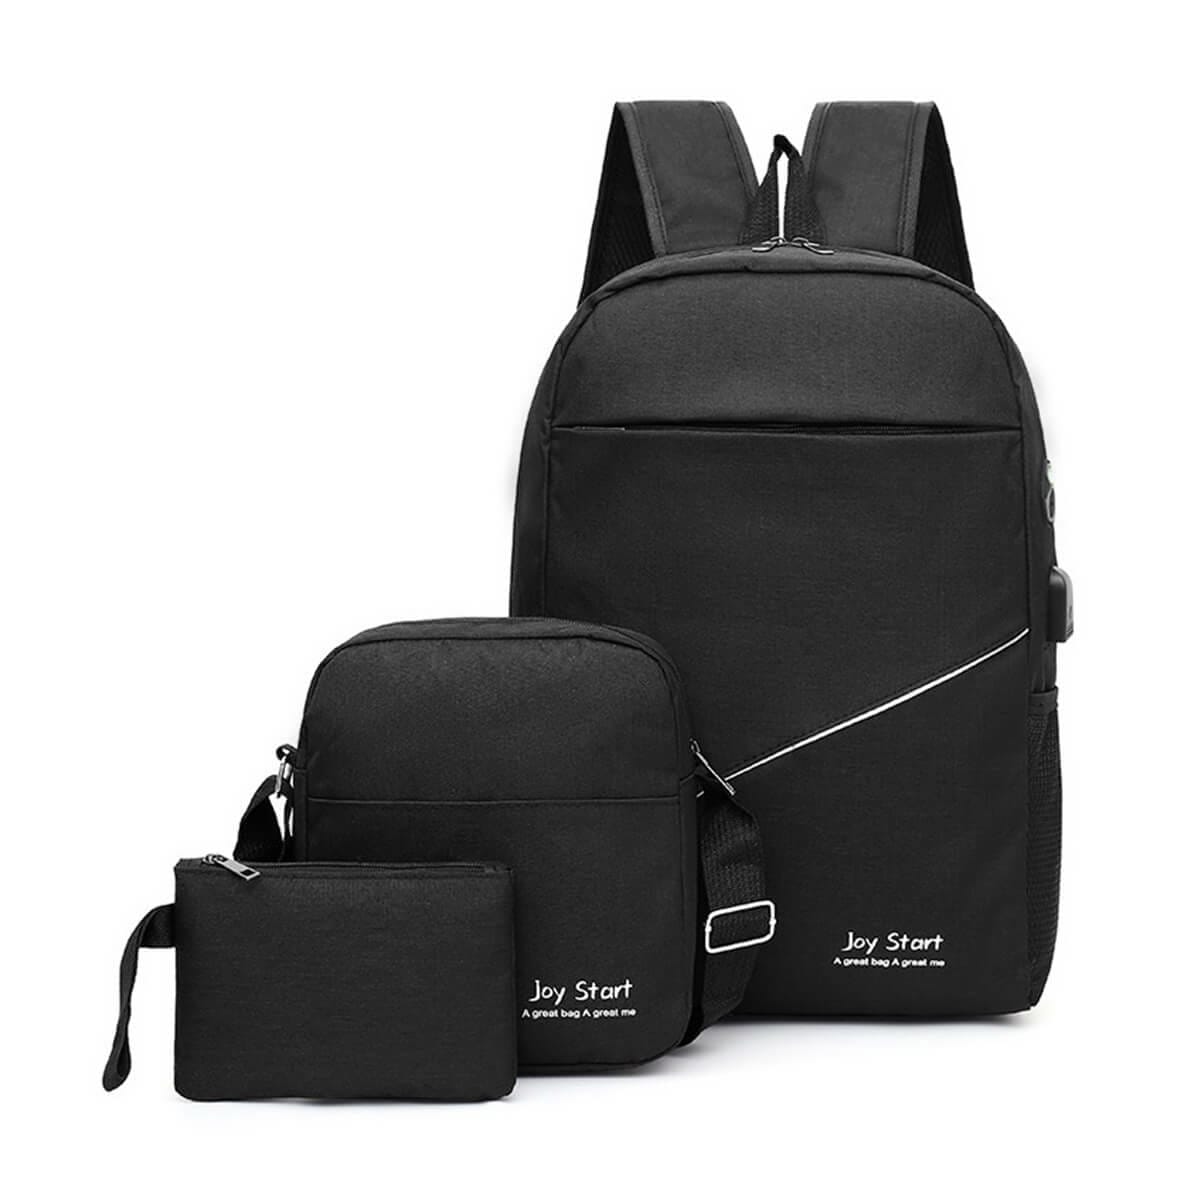 3 in 1 Laptop Backpacks with USB port bag Black